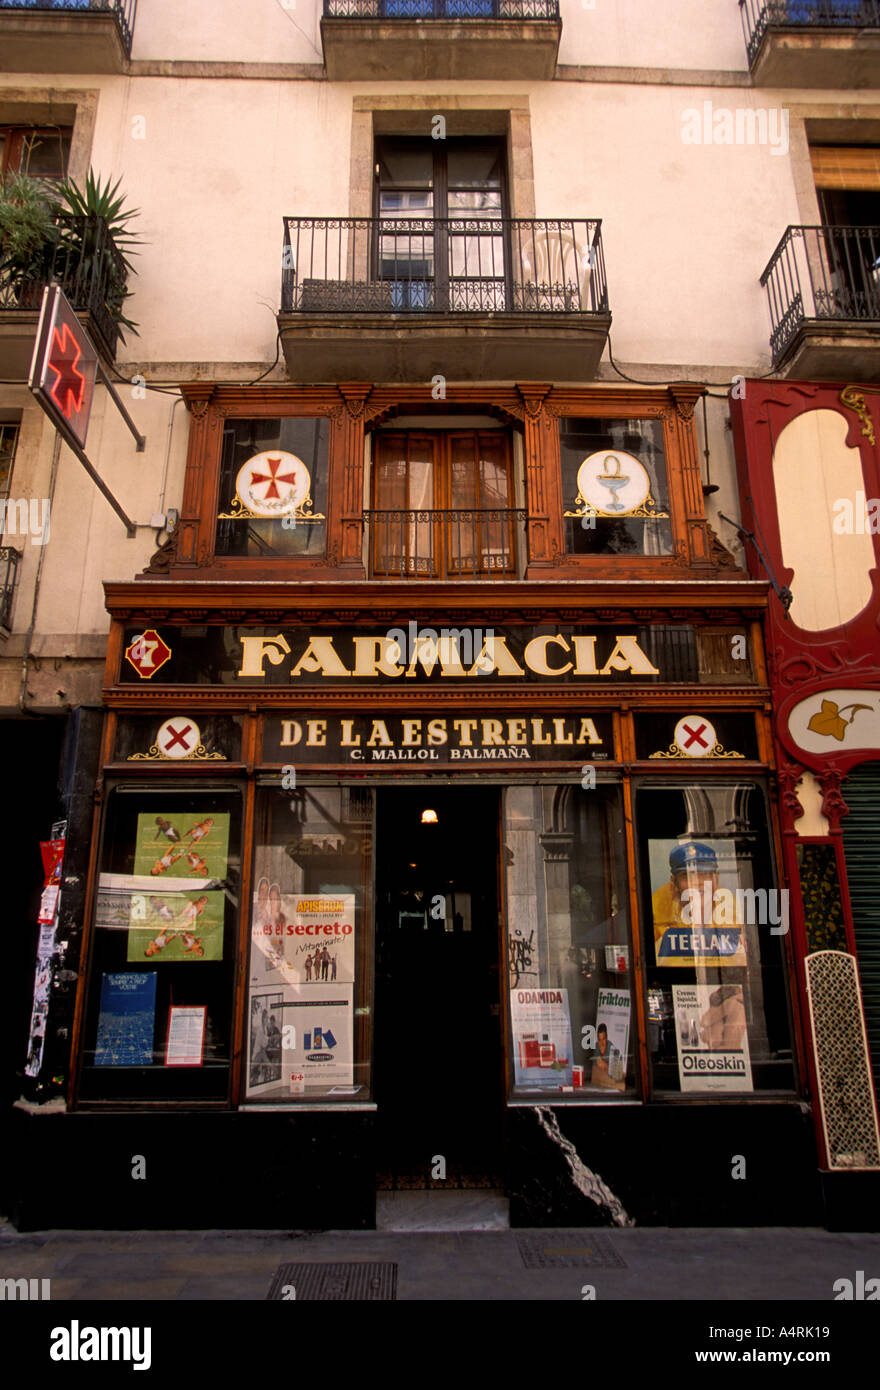 Farmacia de la Estrella, farmacia, pharmacy, Barcelona, Barcelona Province, Spain, Europe Stock Photo